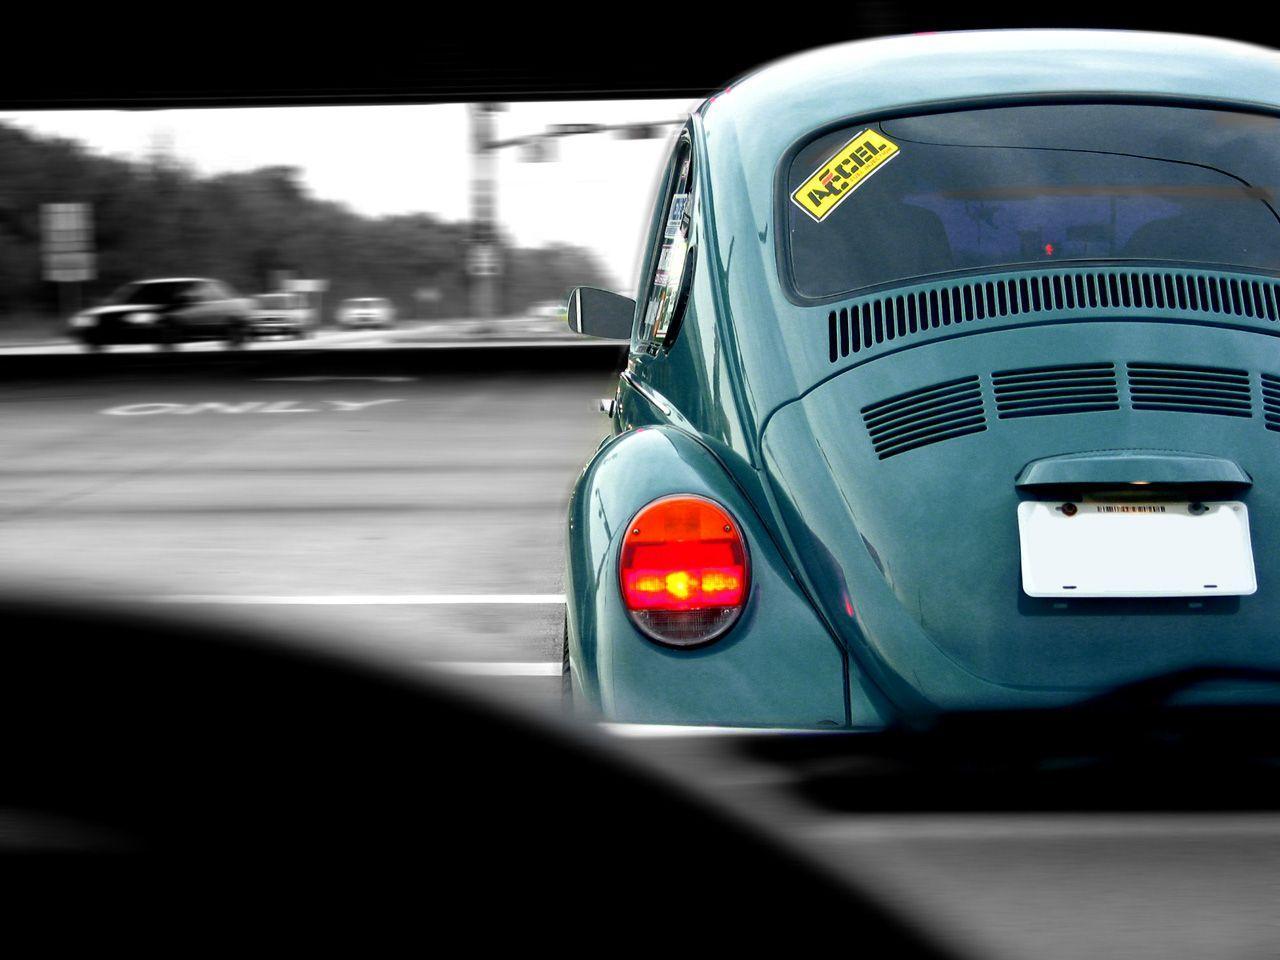 Volkswagen Beetle image vw beetle HD wallpaper and background